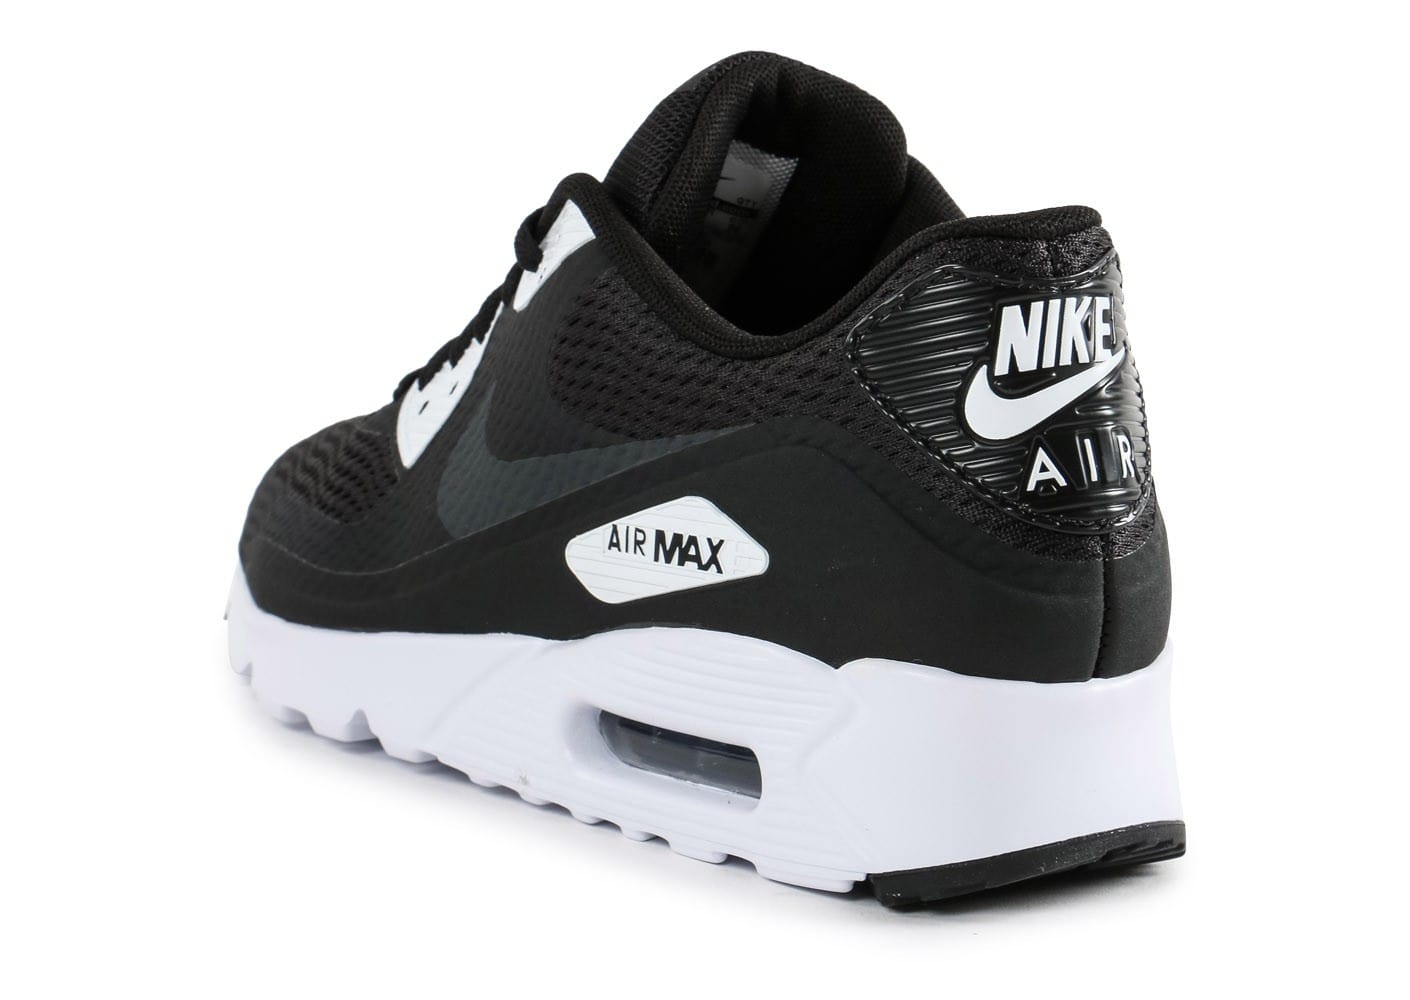 nike air max 90 noir blanche, ... Chaussures Nike Air Max 90 Ultra Essential noire et blanche vue intérieure ...